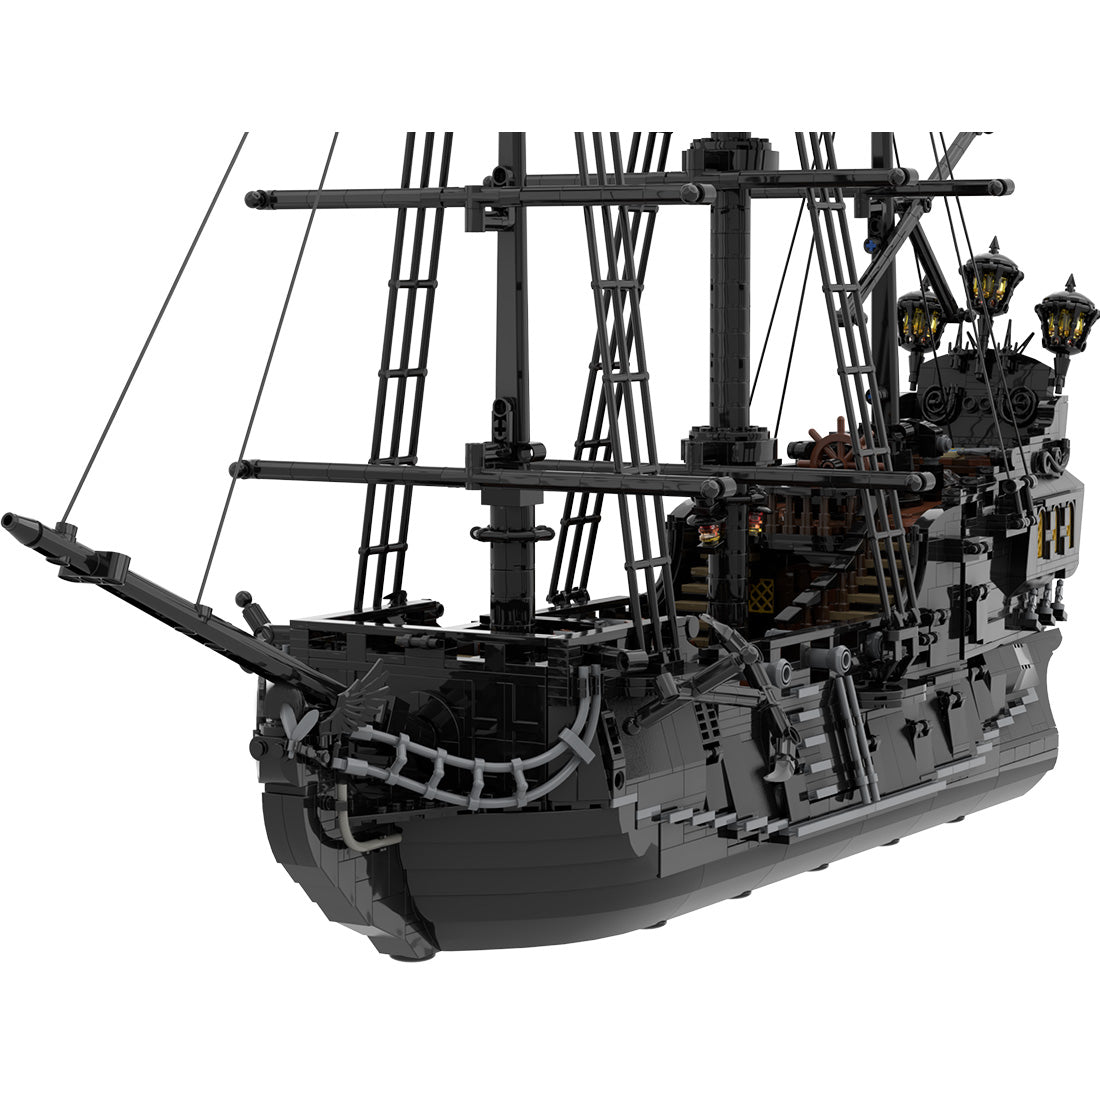 The Black Pearl Medieval Pirate Ship Model